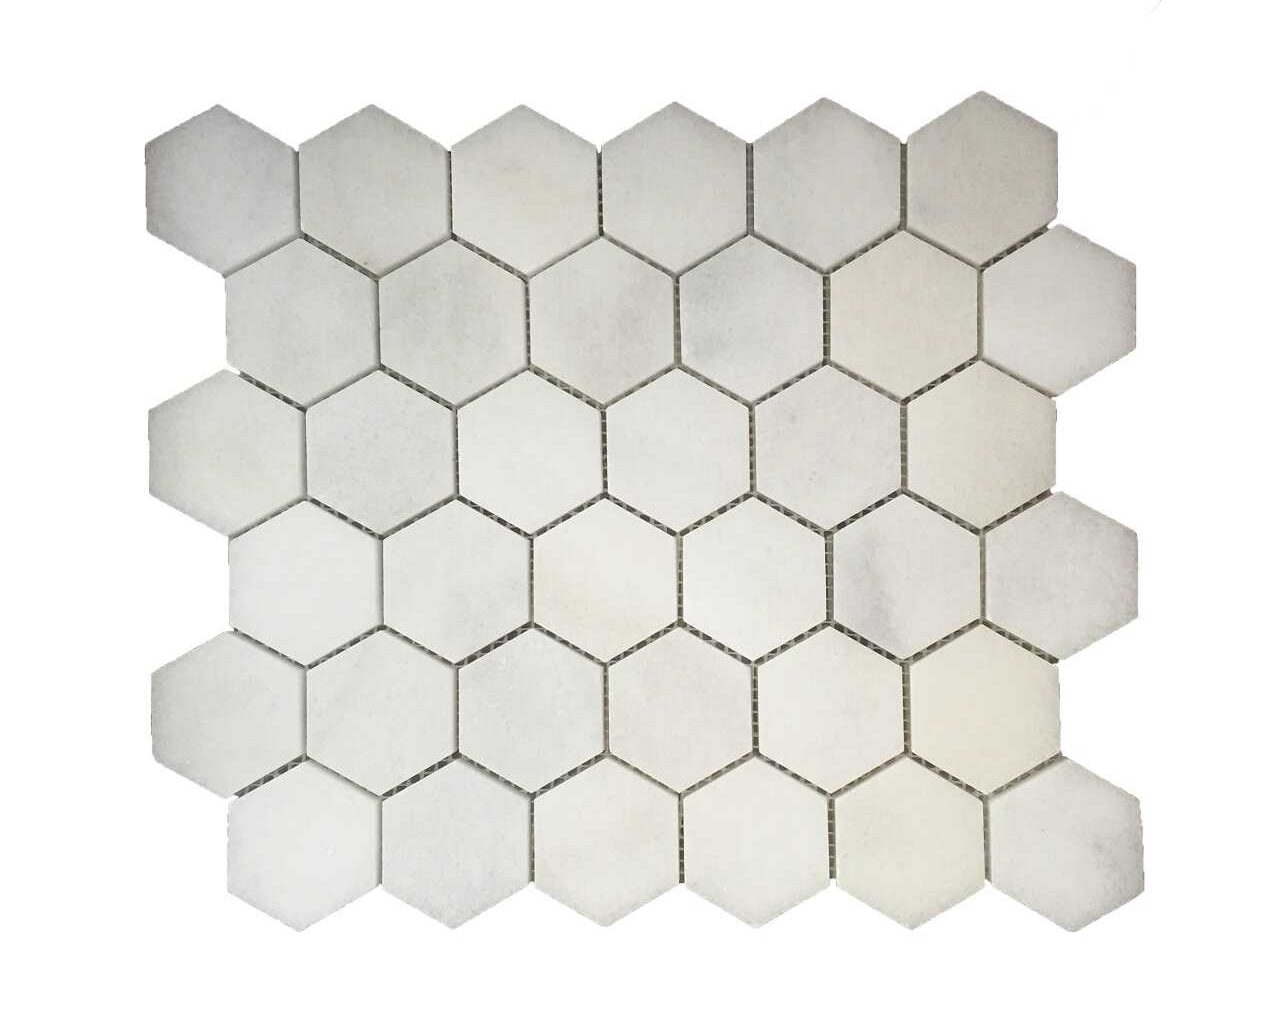 2-hexagon-carrara-extra-polished-mosaic-marble-natural-stone-products